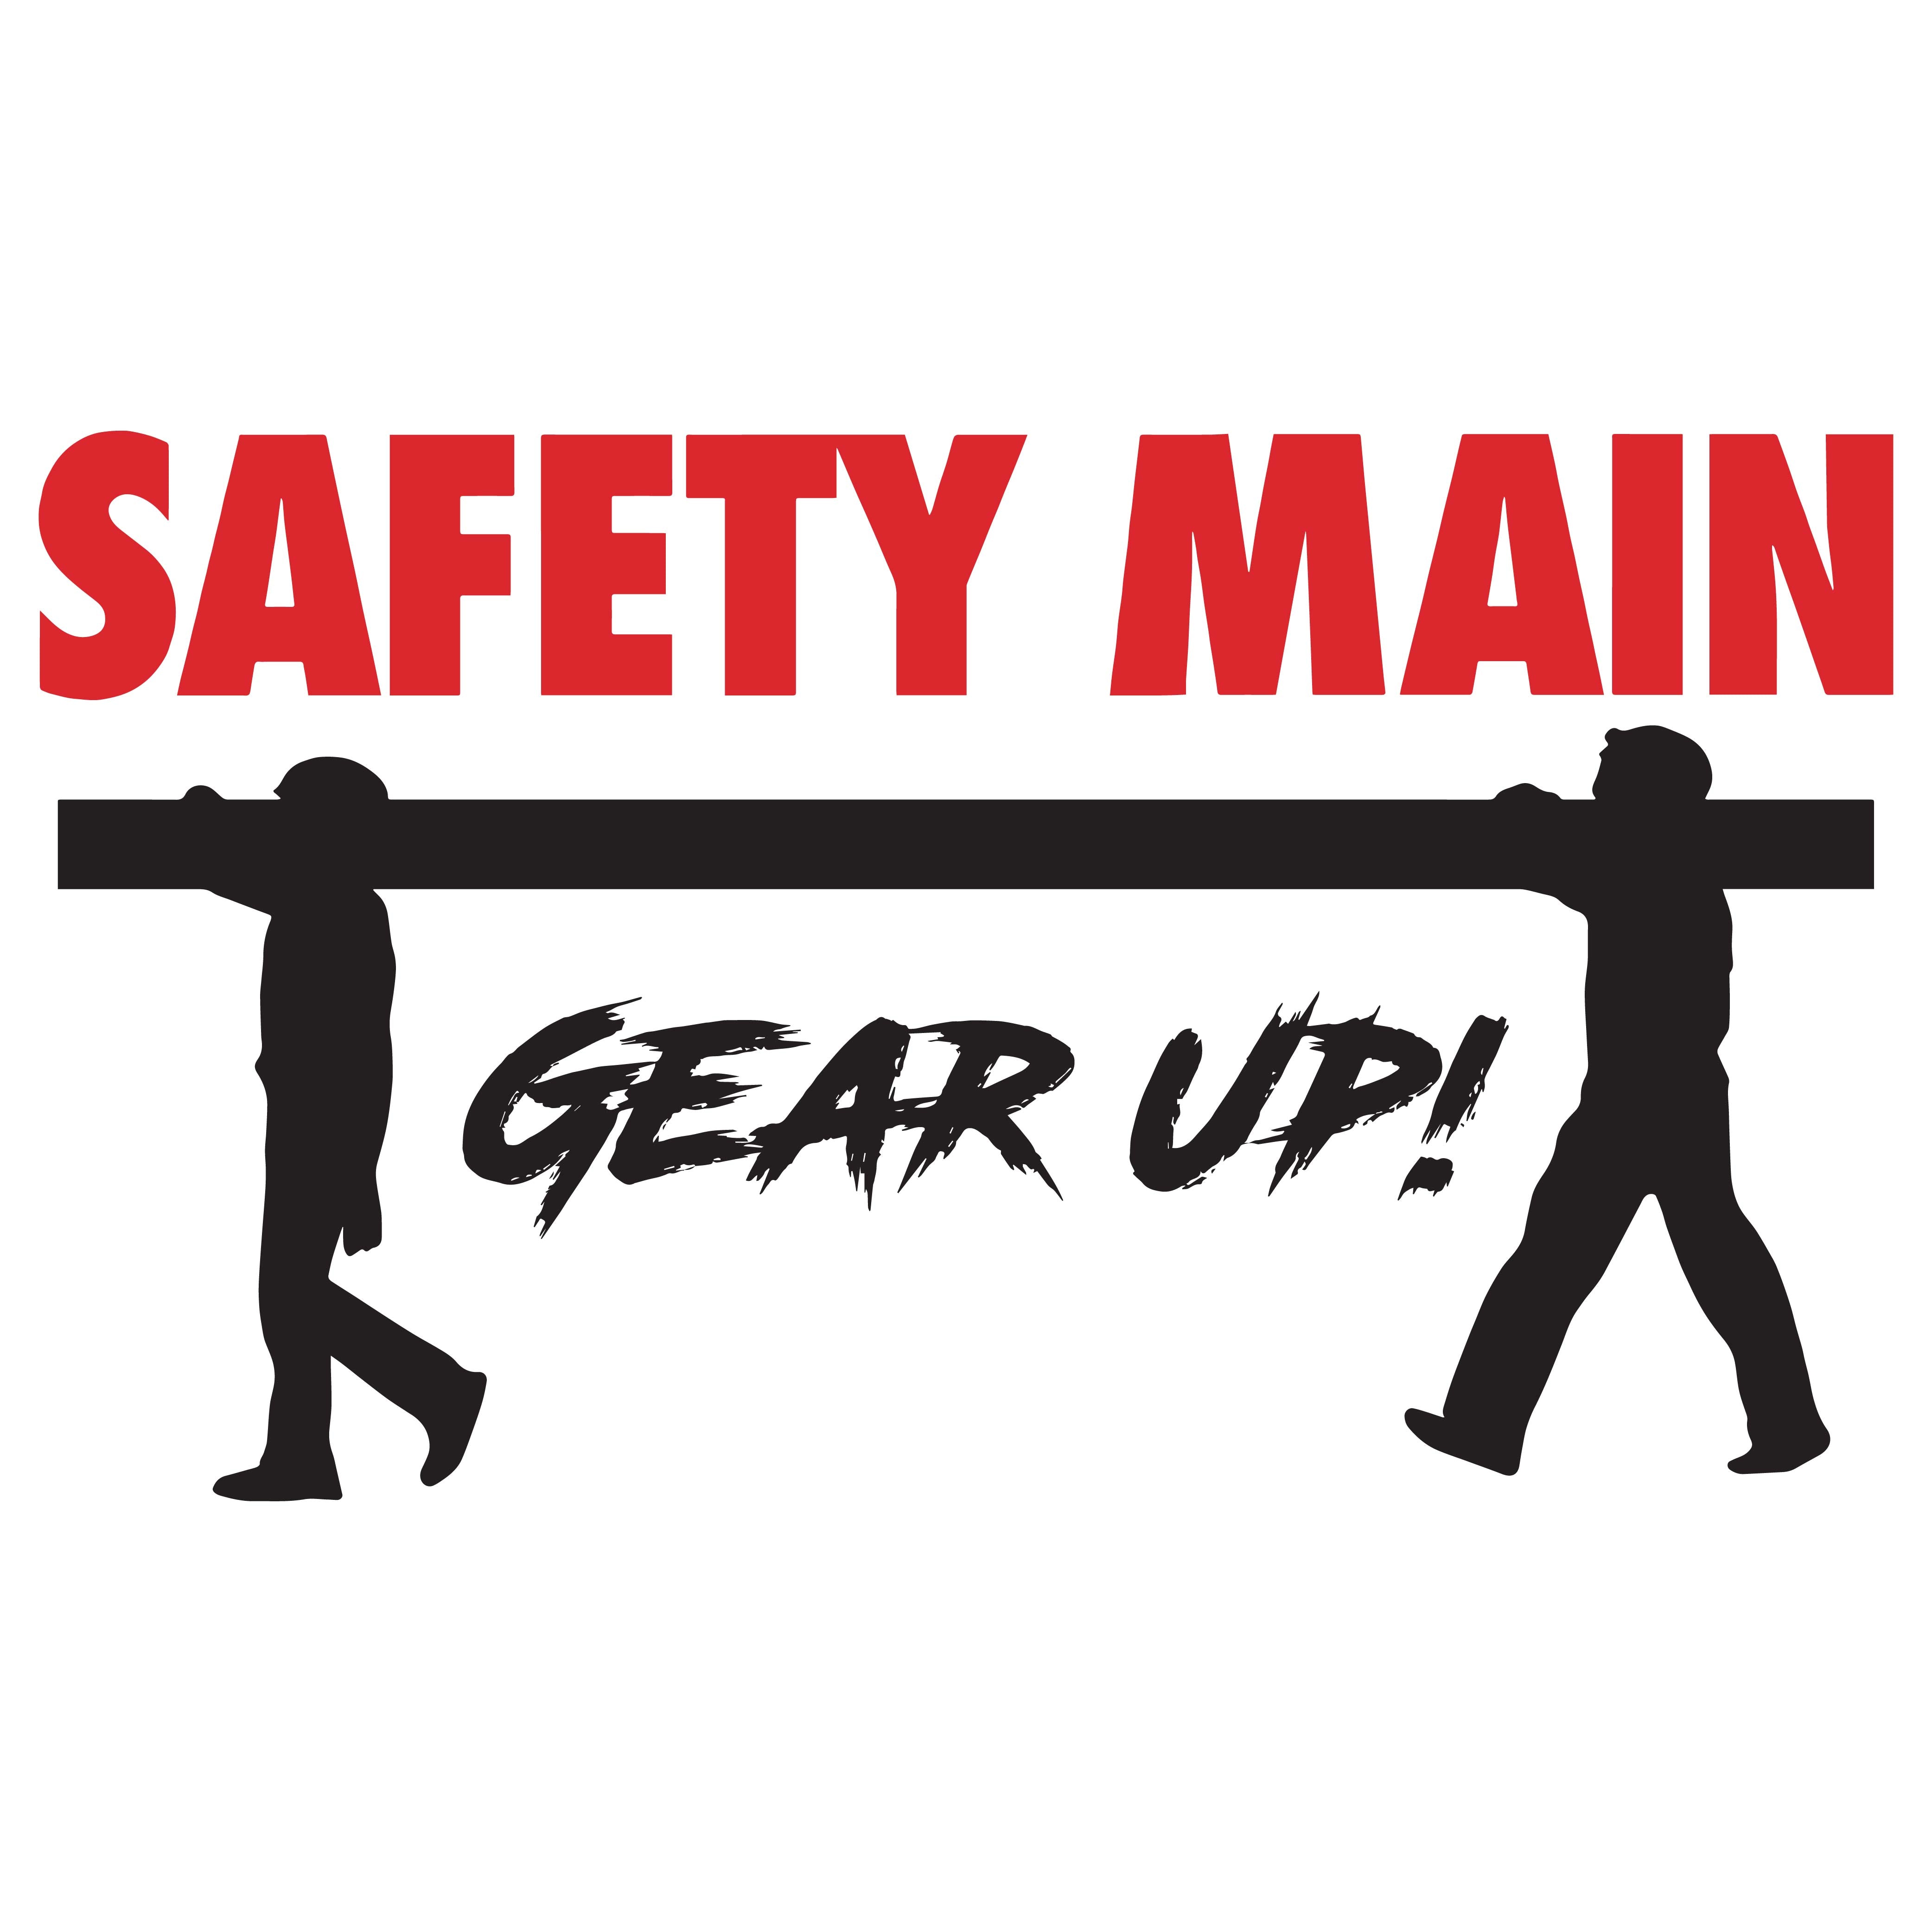 Safety Main